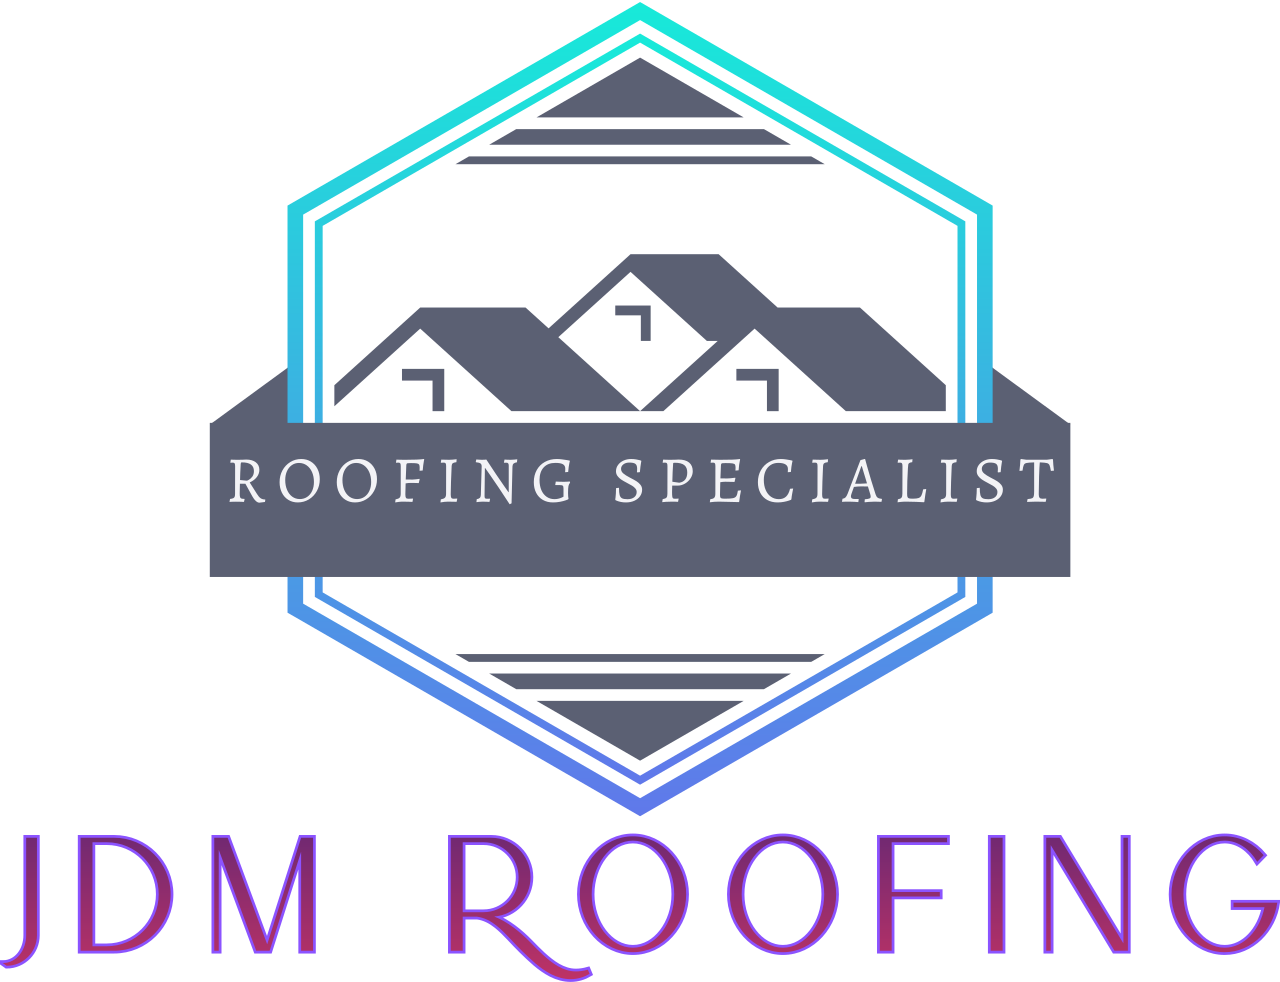 JDM ROOFING's logo